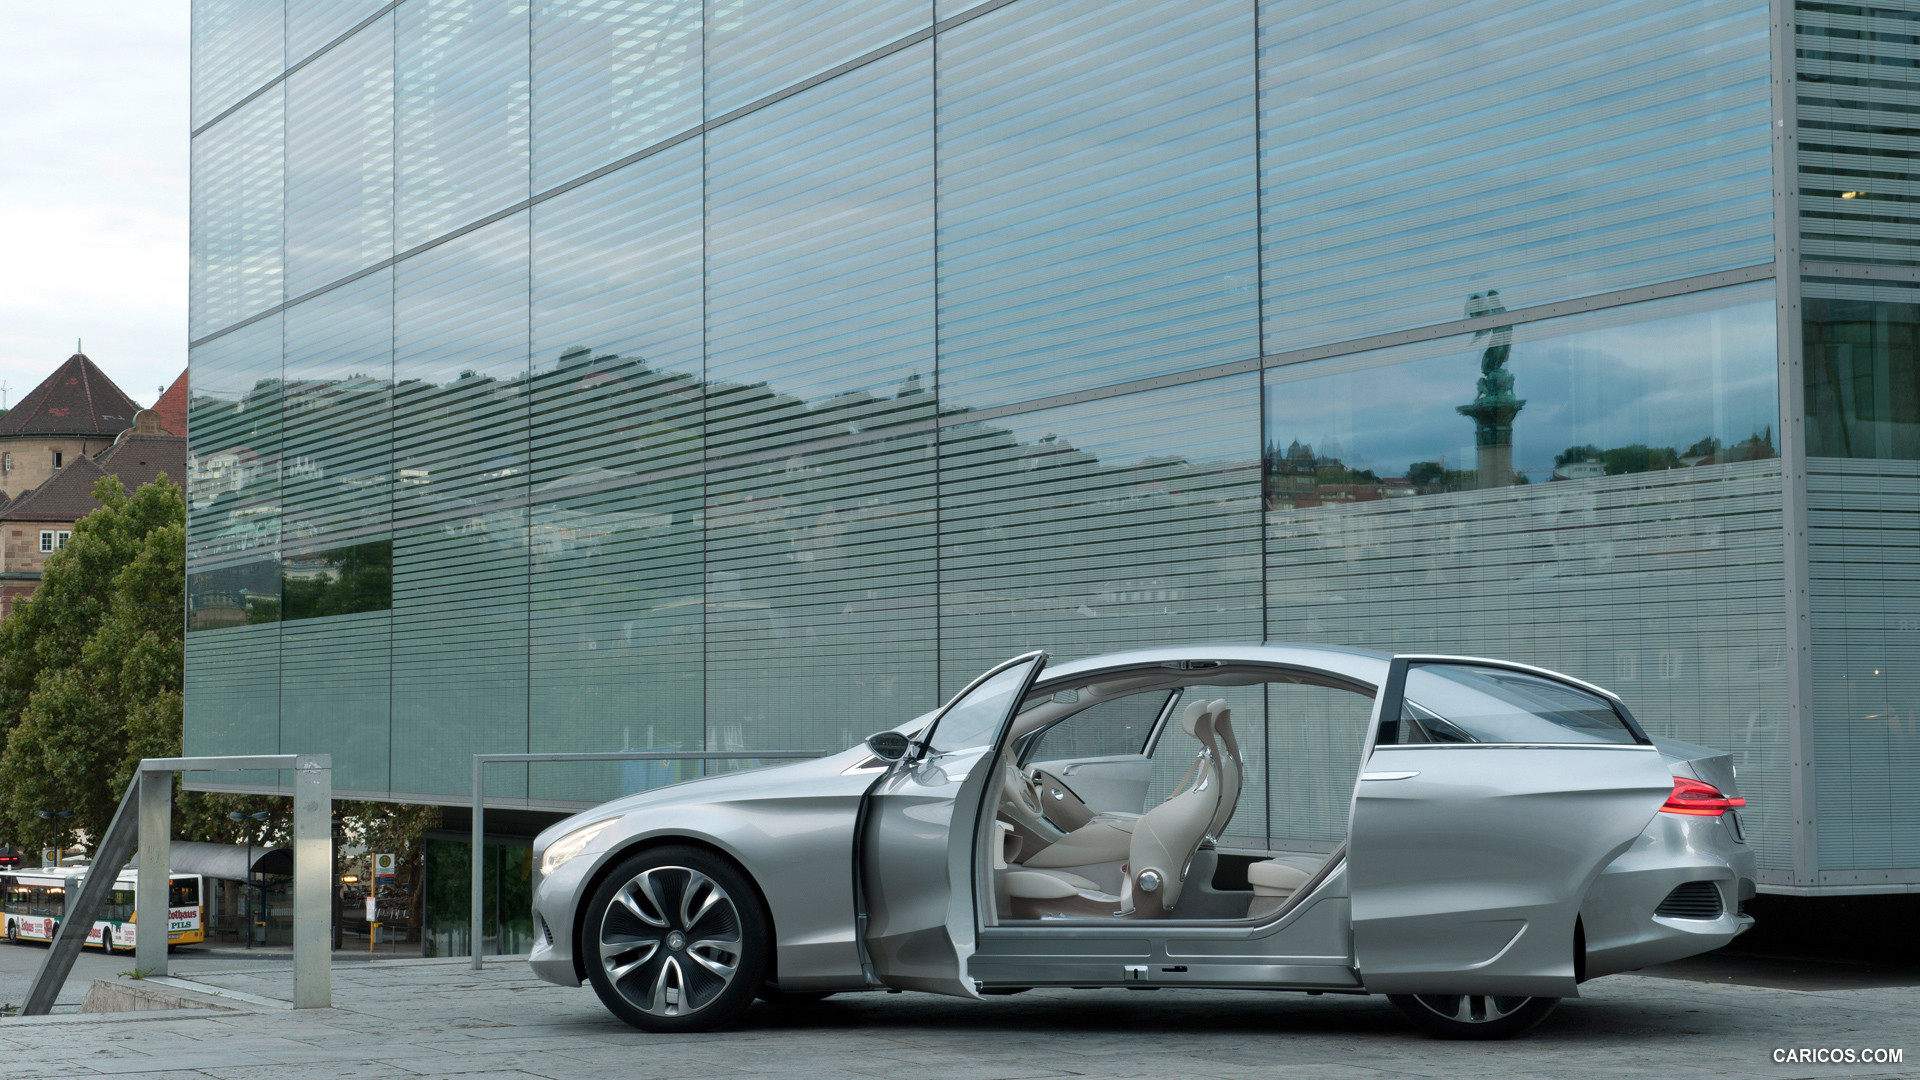 Mercedes-Benz F800 Style Concept (2010) - Doors Open - Side, #4 of 120